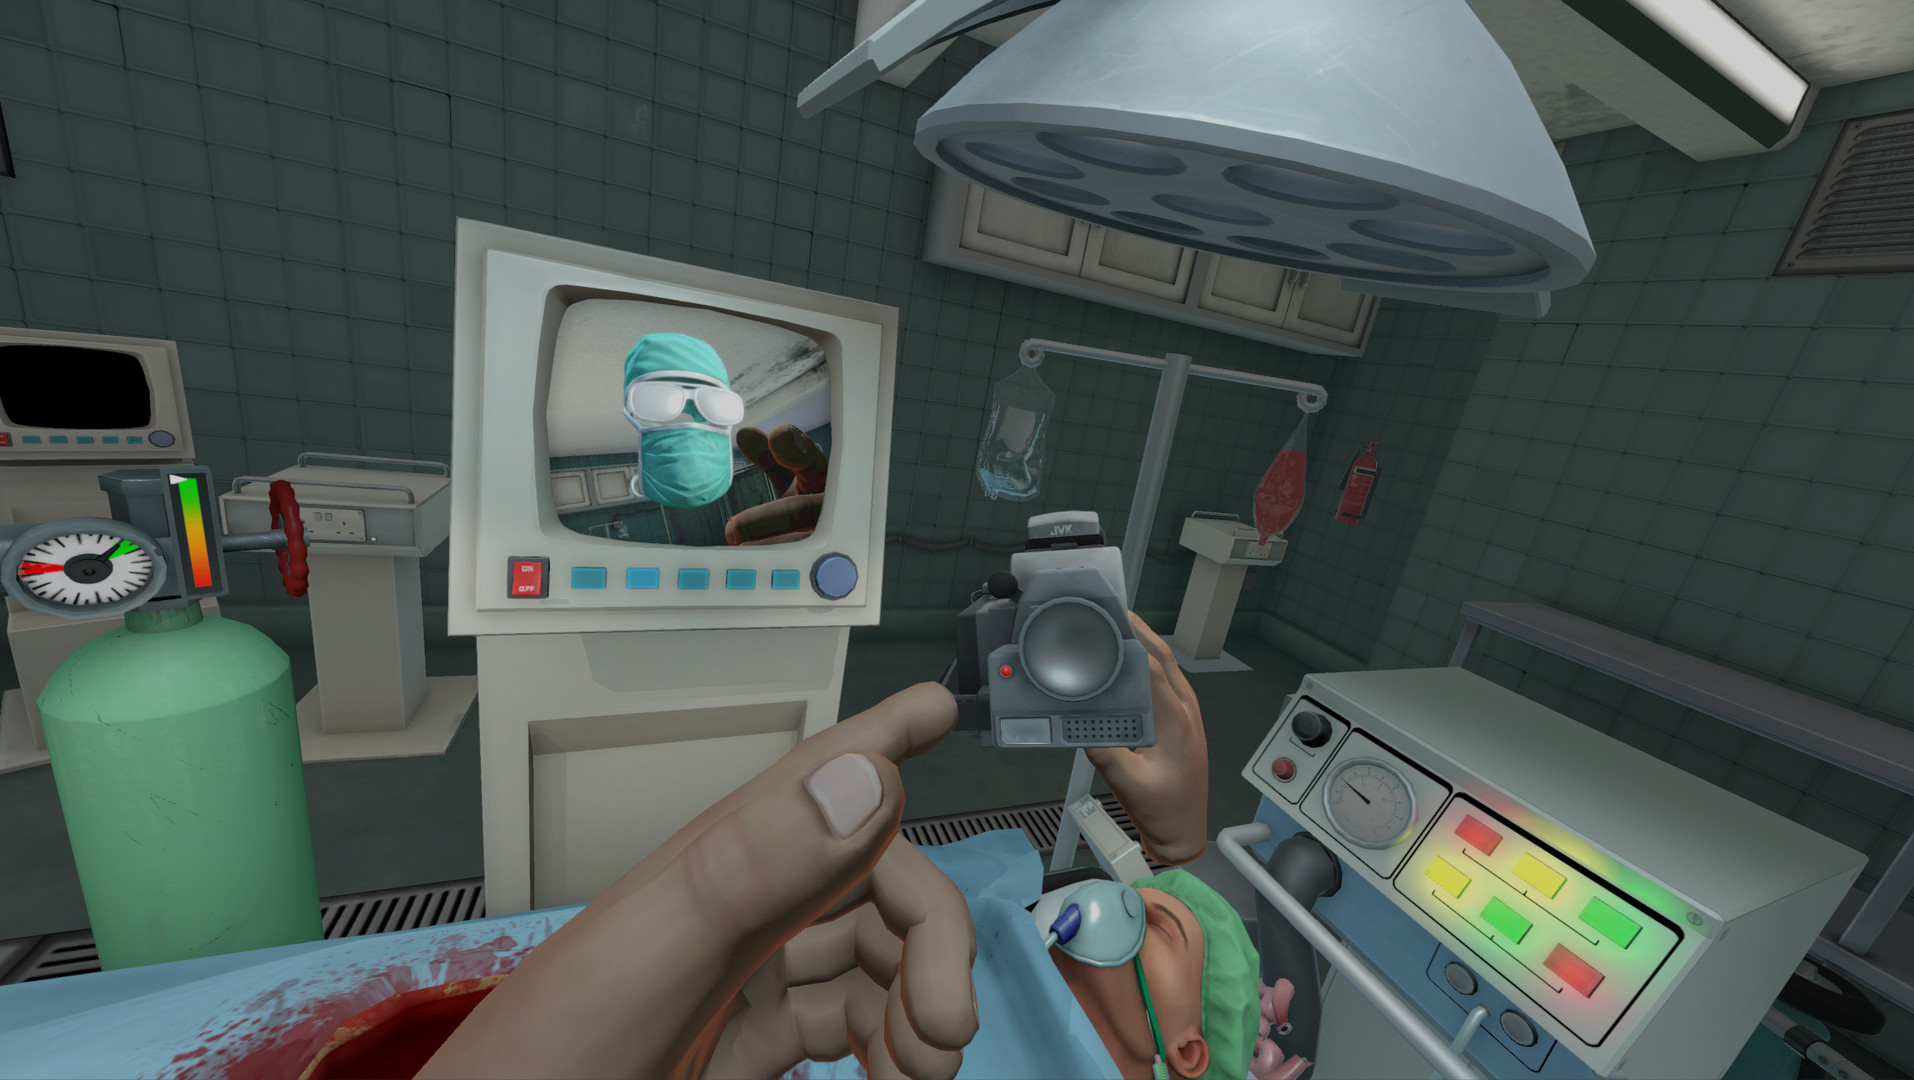 Surgeon Simulator 2 on Steam